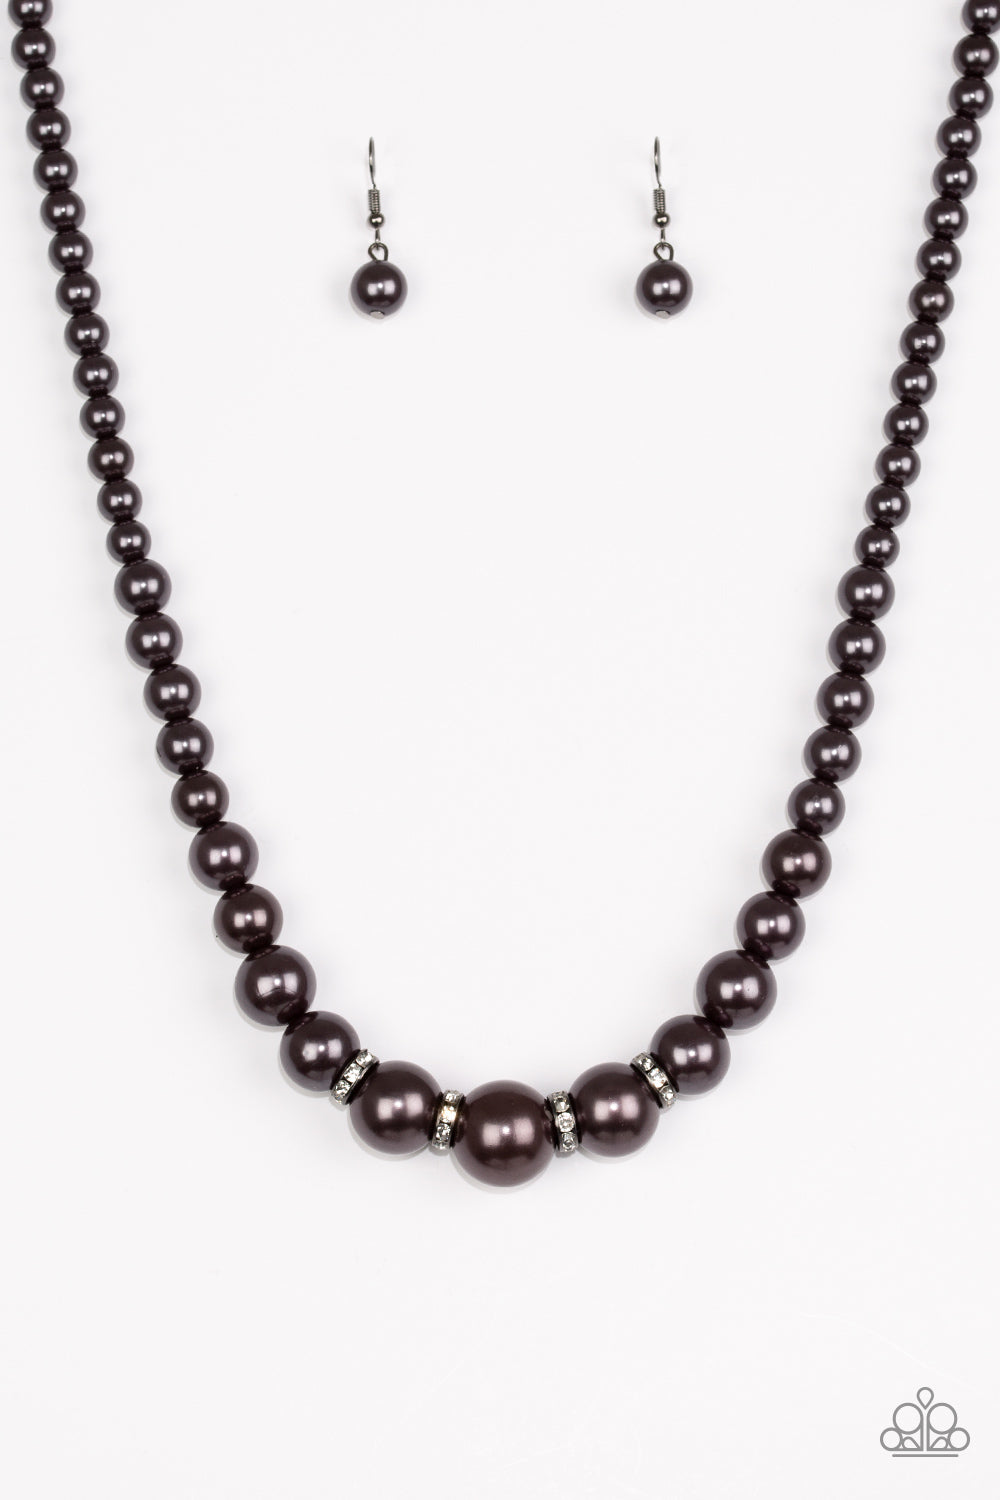 Party Pearls - Black/Gunmetal necklace